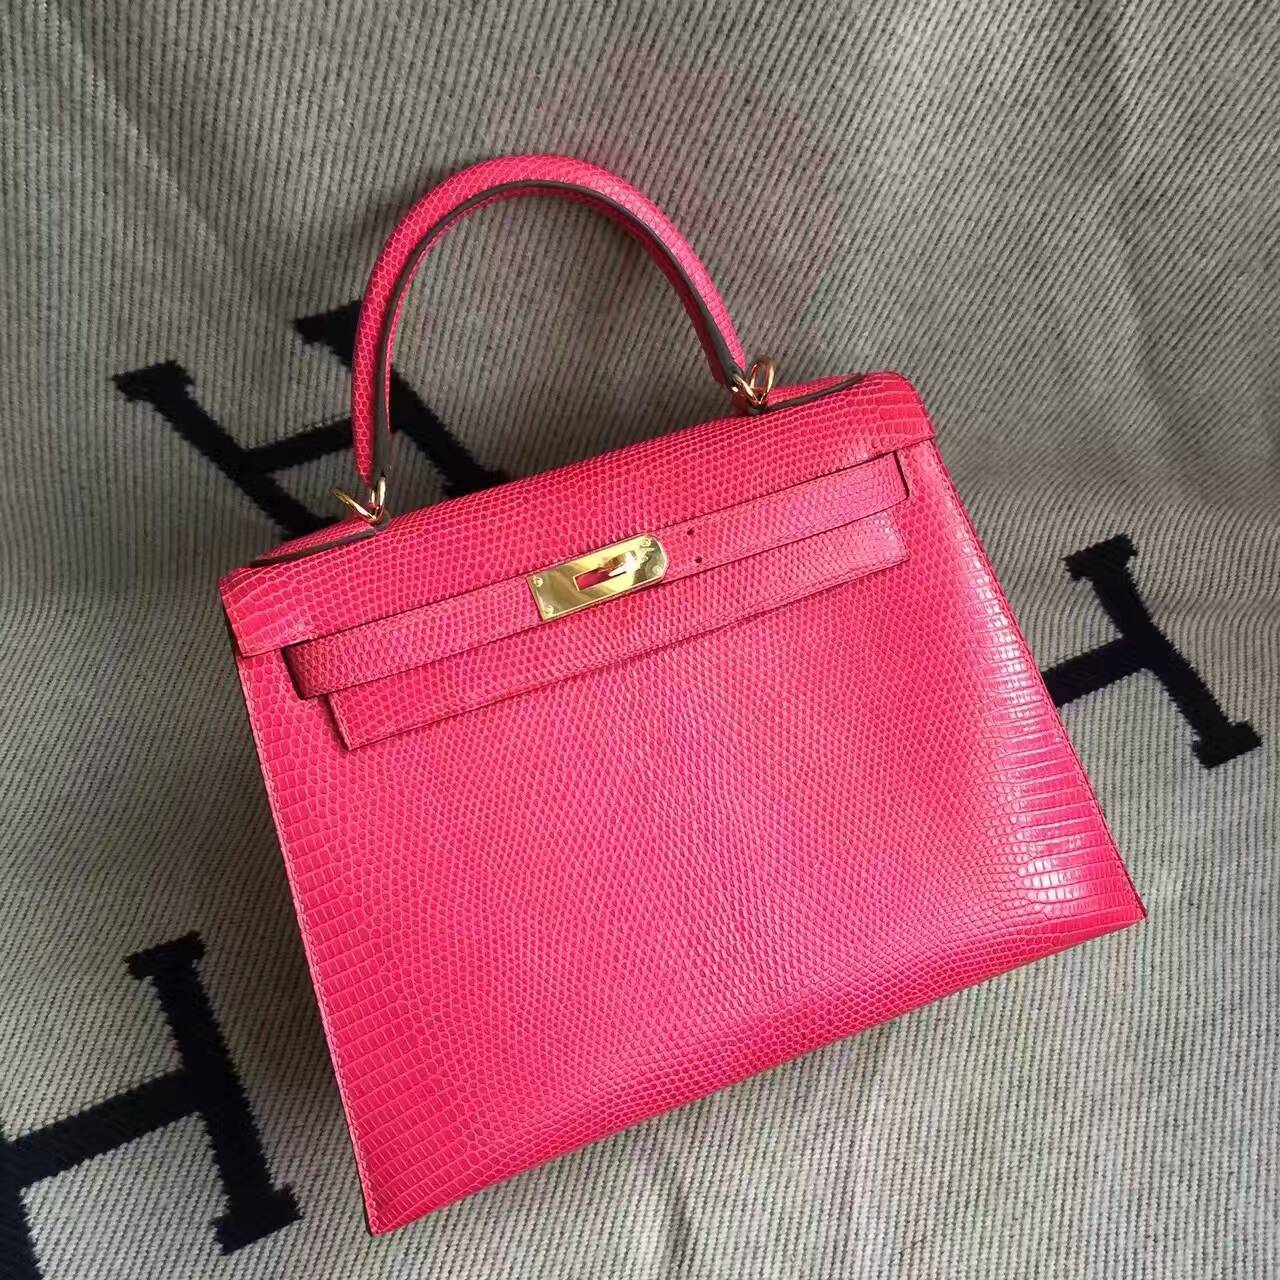 Wholesale Hermes Sellier Kelly Bag28CM in Hot Pink Lizard Leather